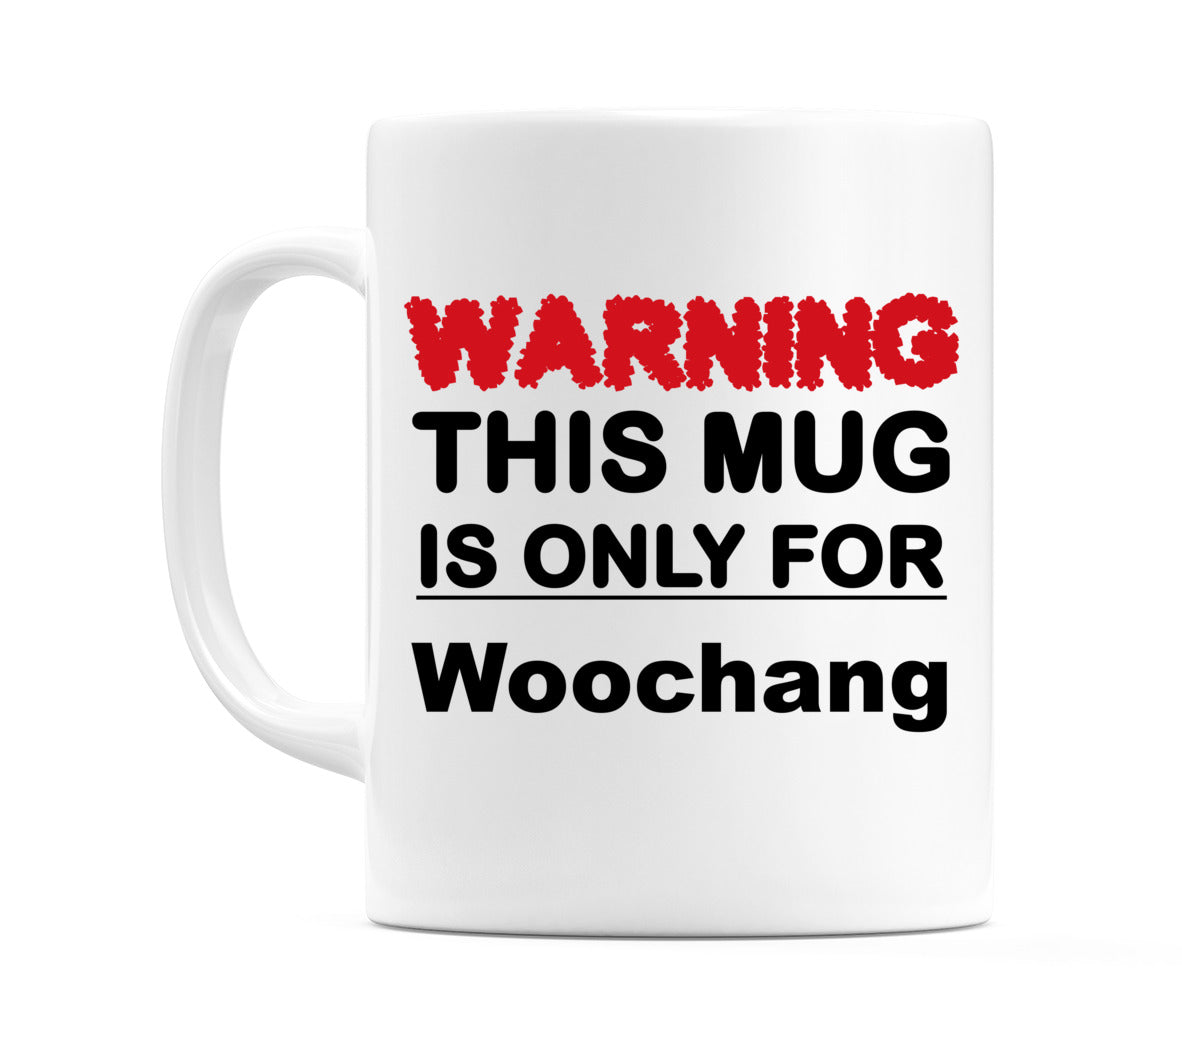 Warning This Mug is ONLY for Woochang Mug